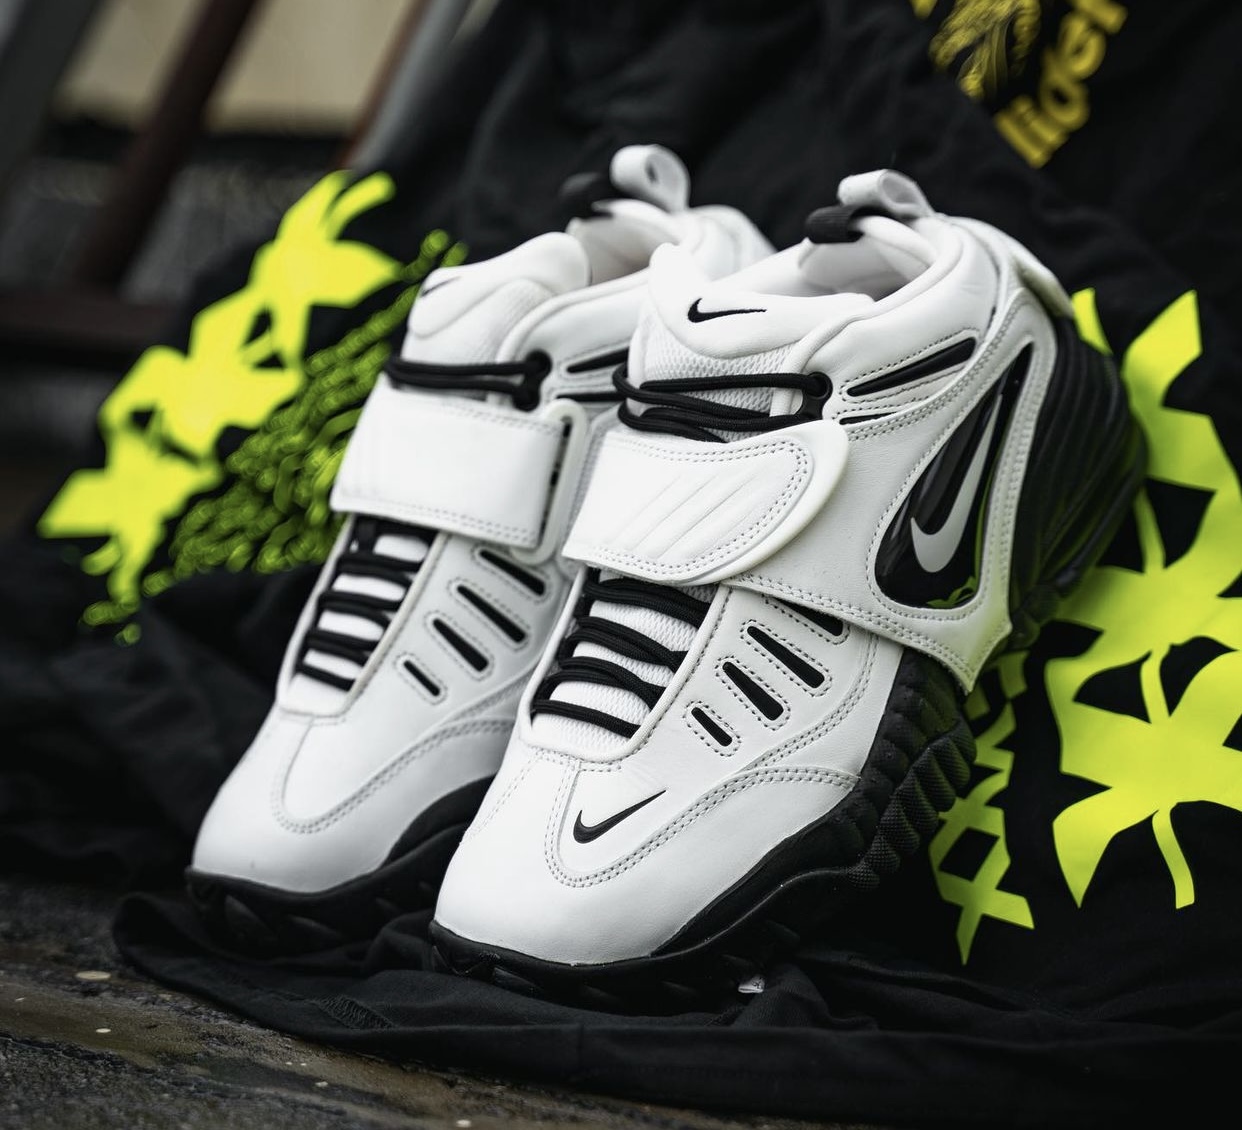 AMBUSH Nike Air Adjust Force White Black Release Date Price